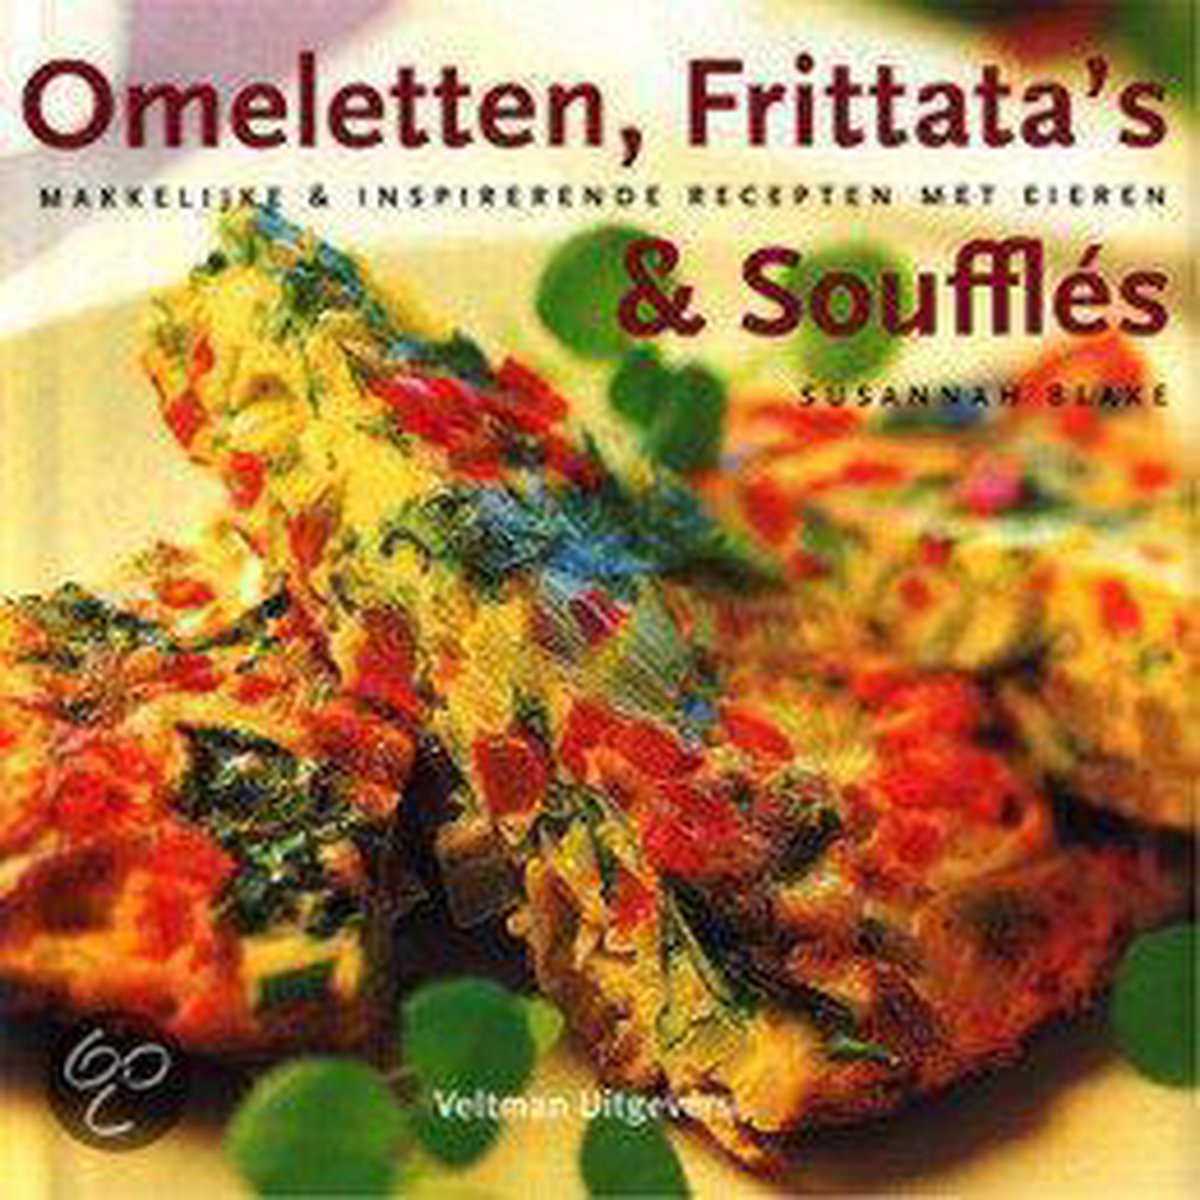 Omeletten, Frittata'S & Souffles